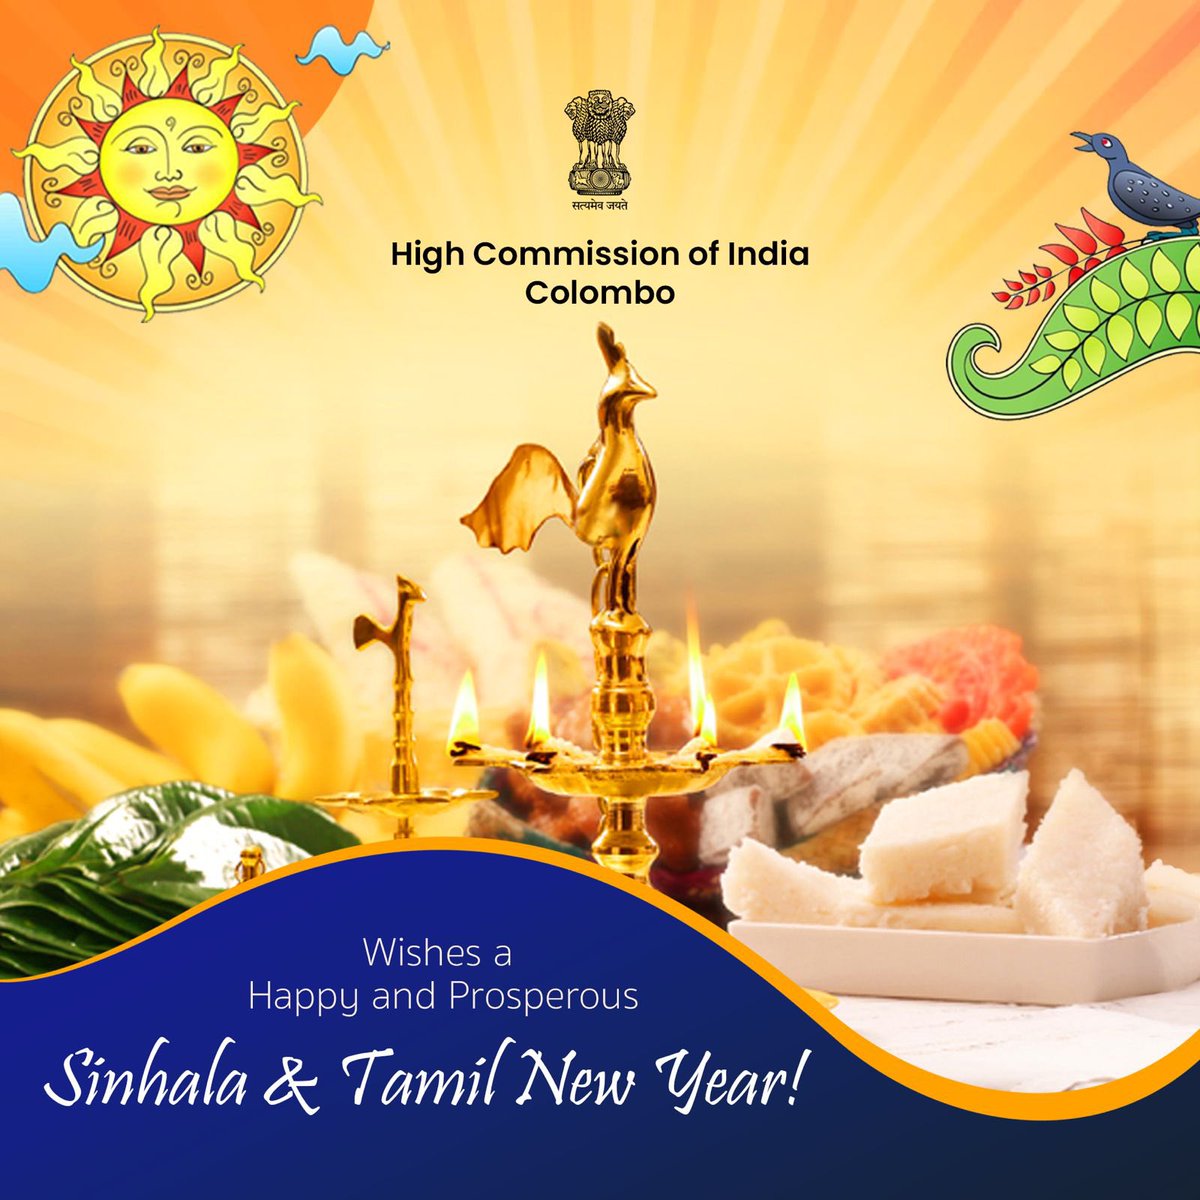 High Commission wishes a happy and prosperous Sinhala and Tamil New Year! සතුට සපිරි සෞභාග්‍යමත් සිංහල සහ දමිළ අලුත් අවුරුද්දක් වේවා! மகிழ்ச்சியும் சுபீட்சமும் நிறைந்த தமிழ் & சிங்கள புத்தாண்டிற்காக நல் வாழ்த்துகள்!